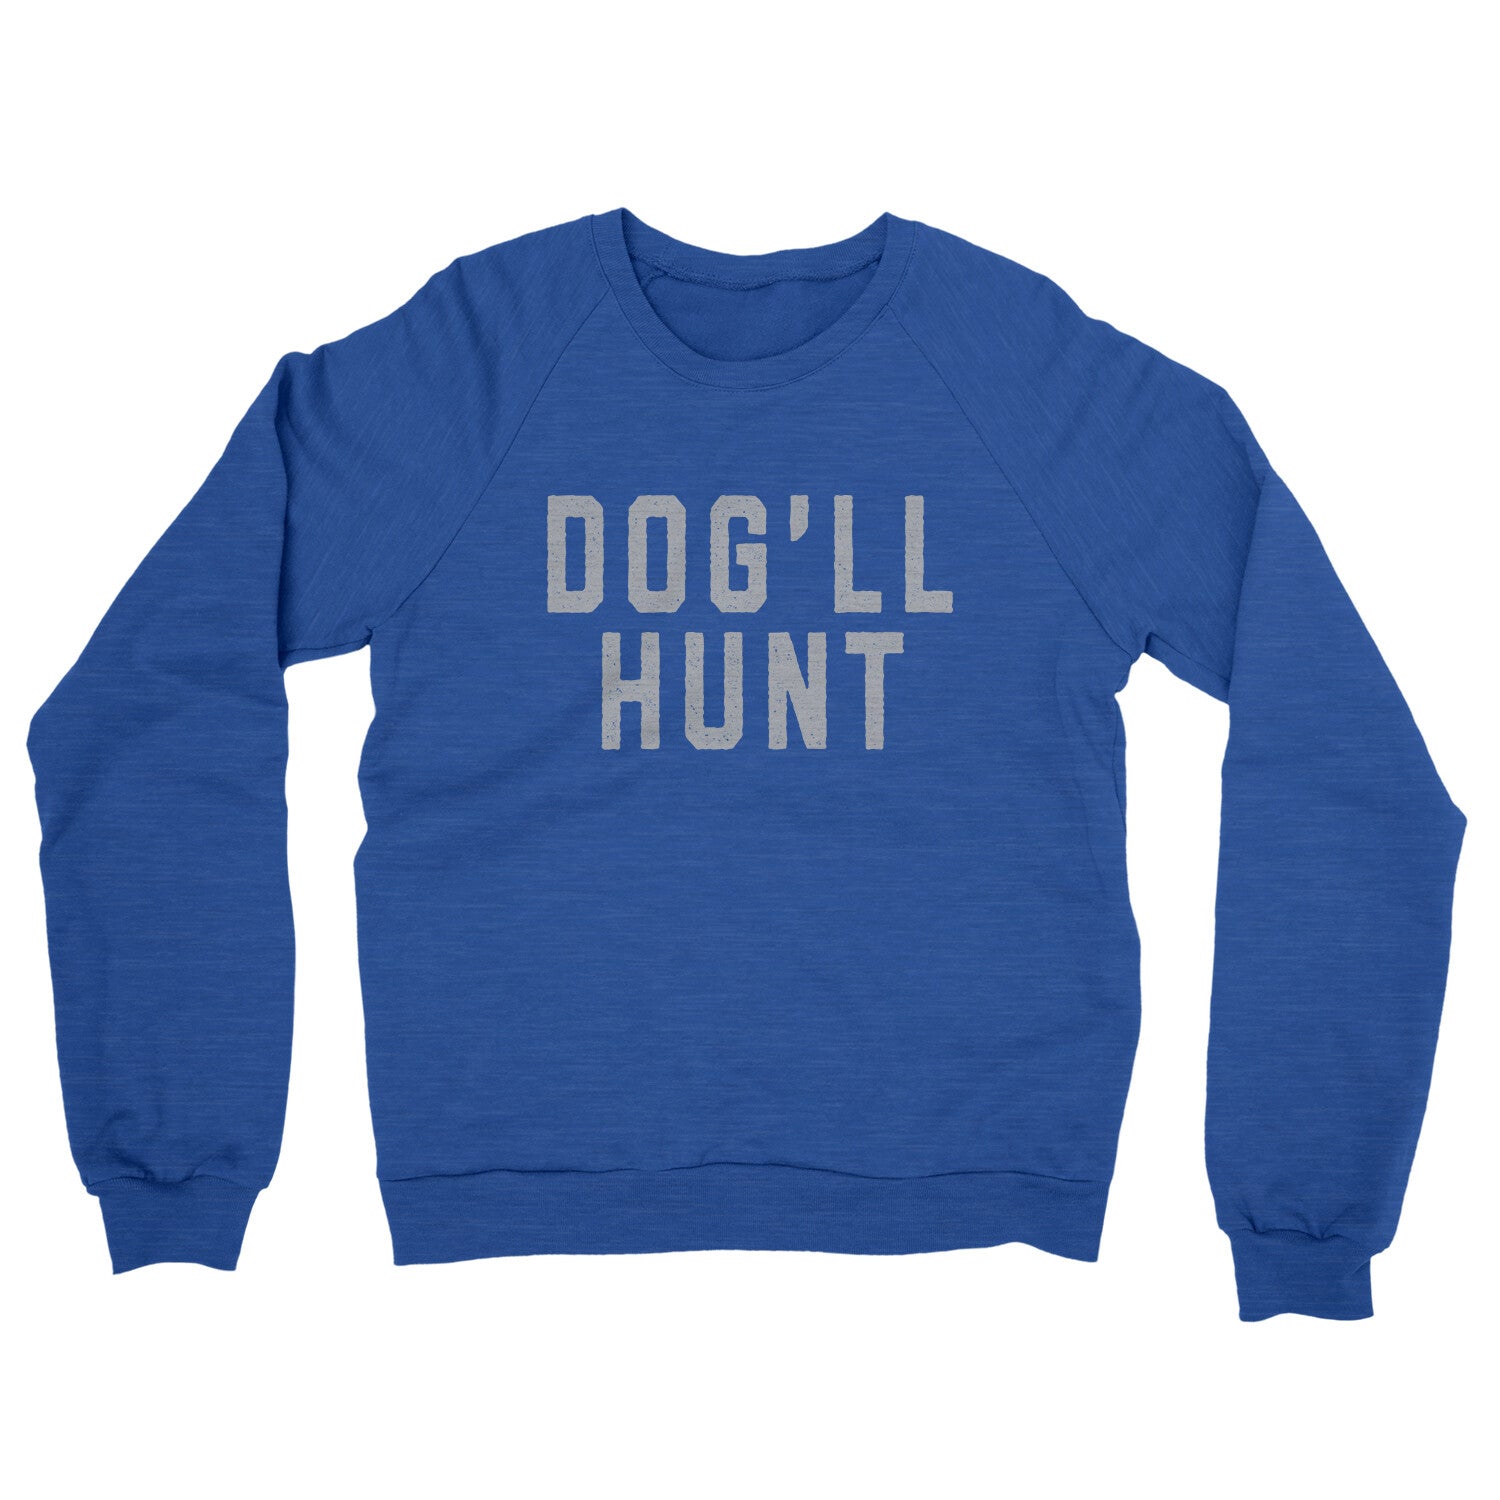 Dog’ll Hunt in Heather Royal Color